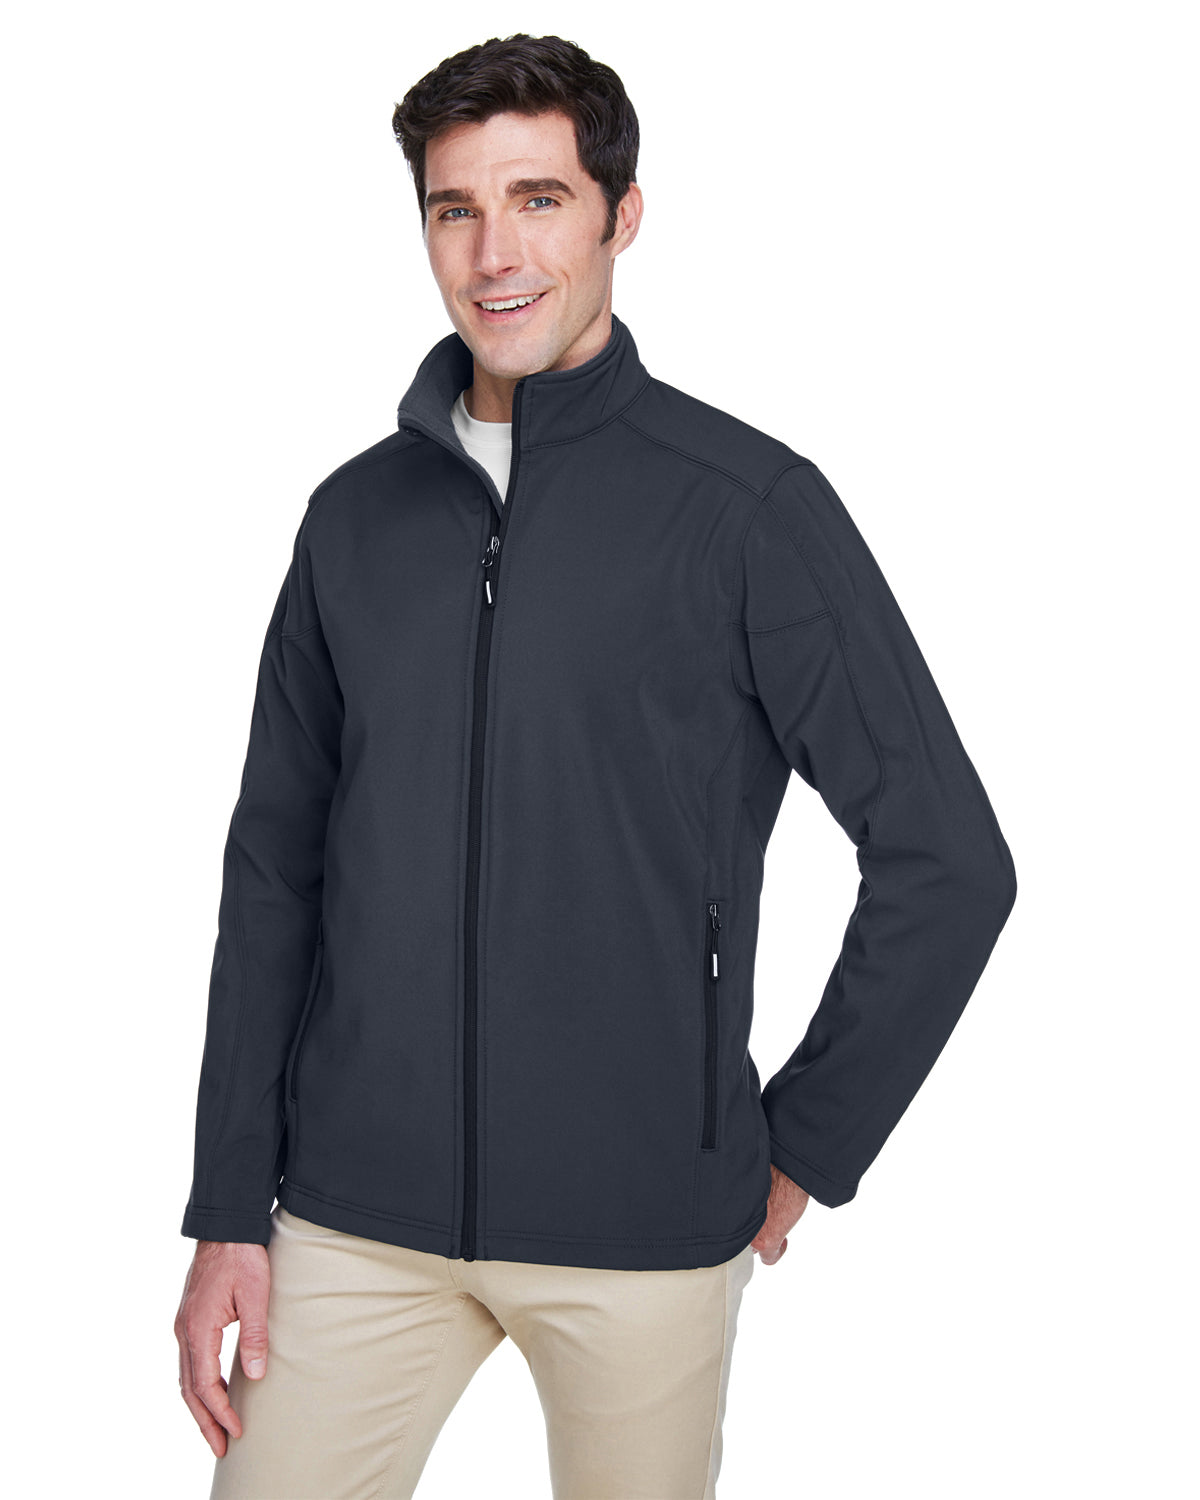 Ash City® Core 365 Men's Cruise Two-Layer Fleece Bonded Soft Shell Jacket